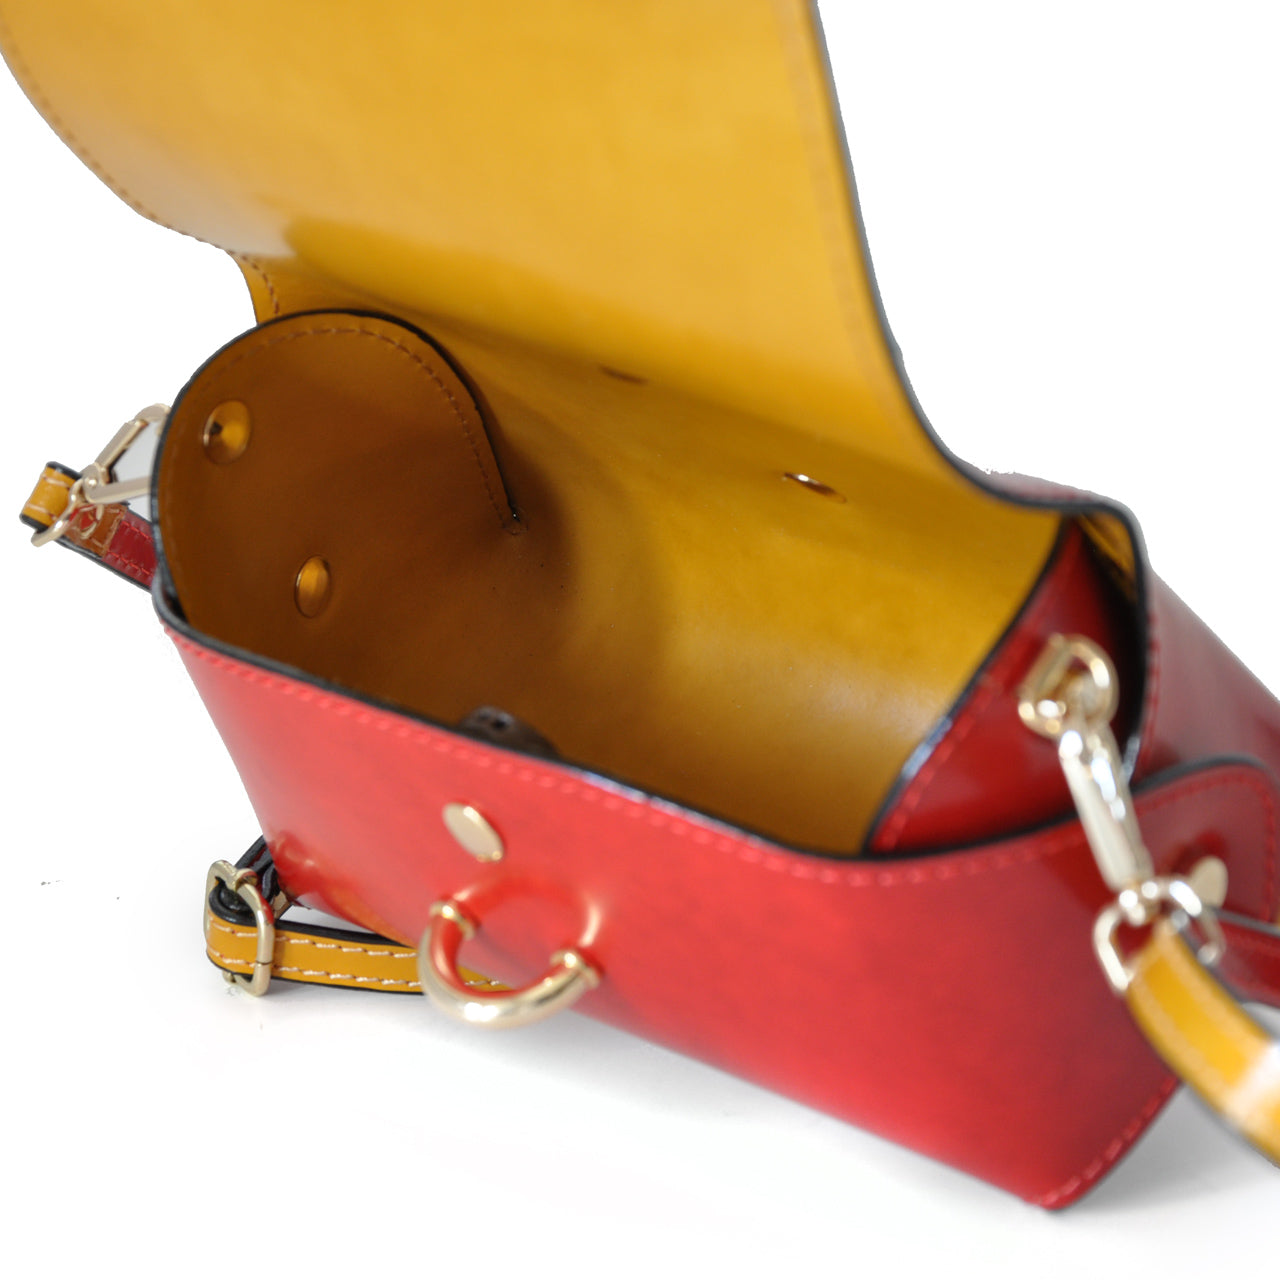 Pratesi Buonconvento R331 - Brunelleschi Leather Mustard